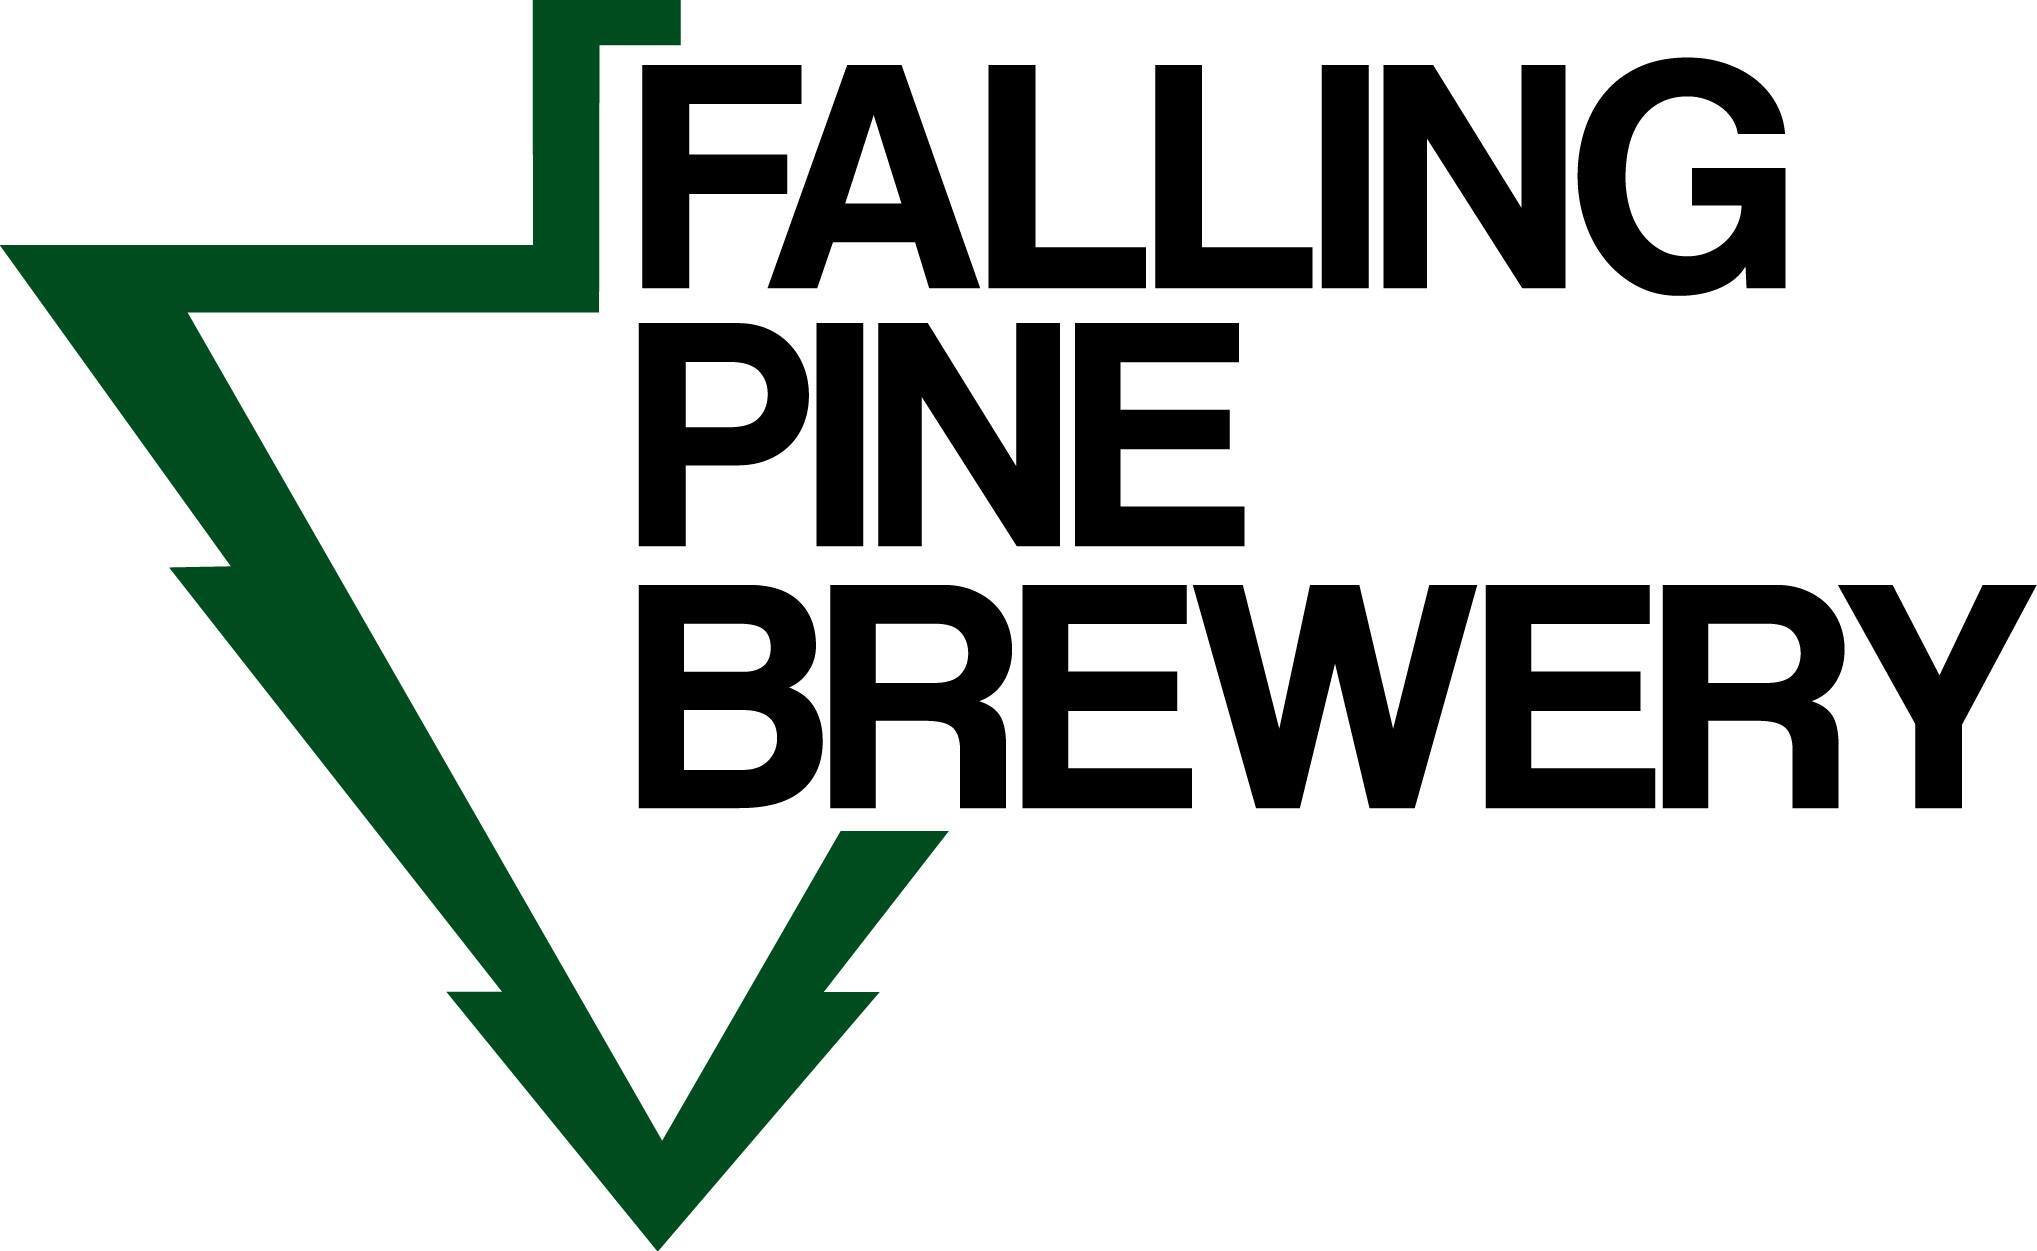 Falling Pine Brewery